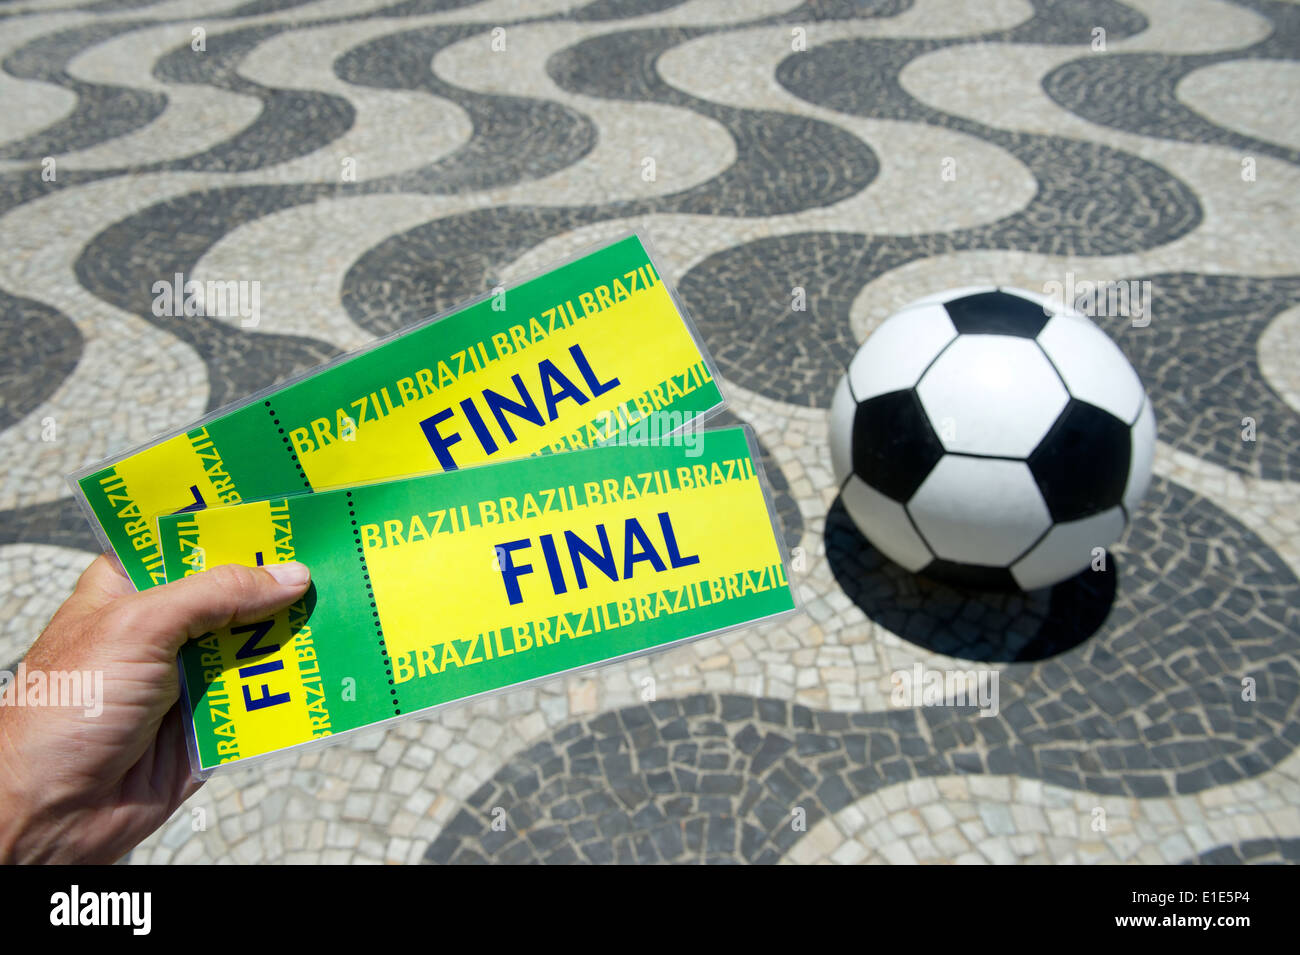 Hand holding pair of tickets to final event in Copacabana Rio de Janeiro Brazil Stock Photo